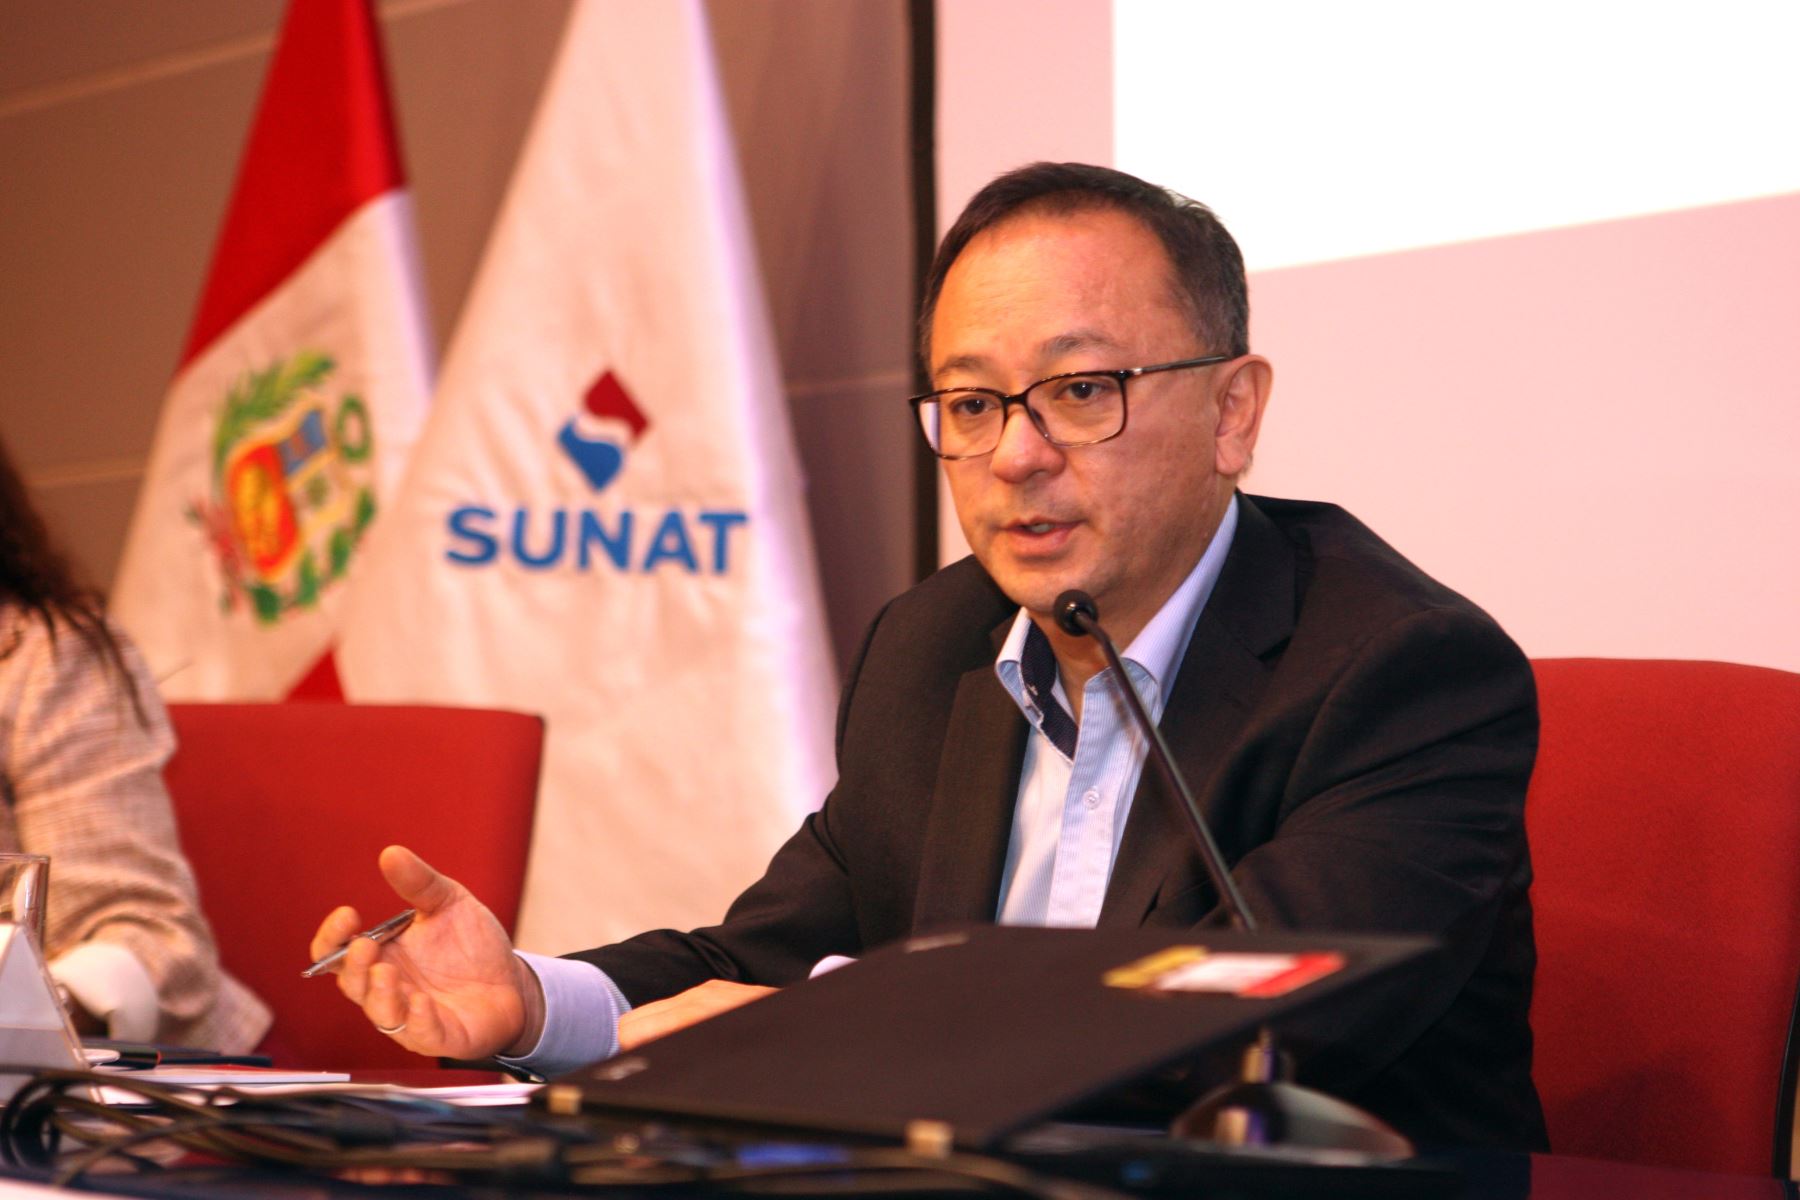 Jefe de la Sunat, Víctor Shiguiyama. ANDINA/Luis Iparraguirre